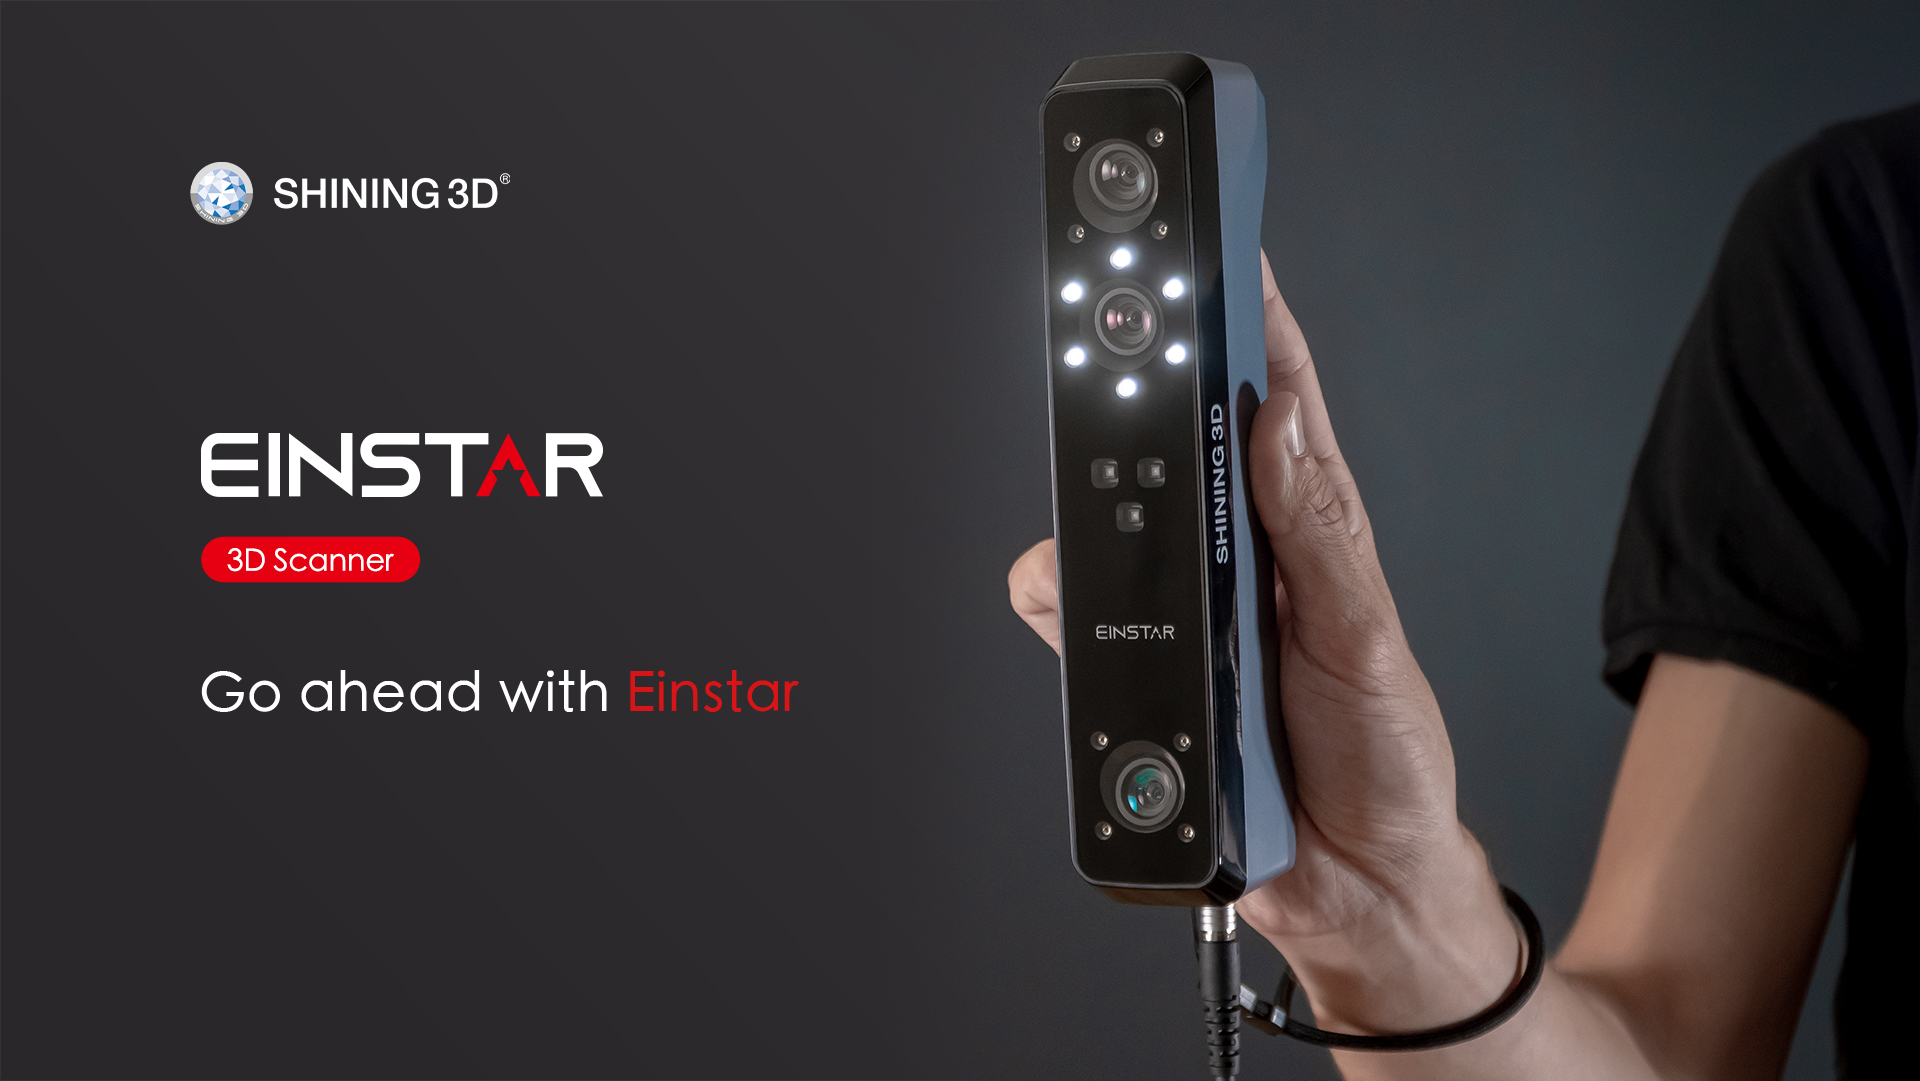 Einstar 3D Scanner is Here! - SHINING 3D